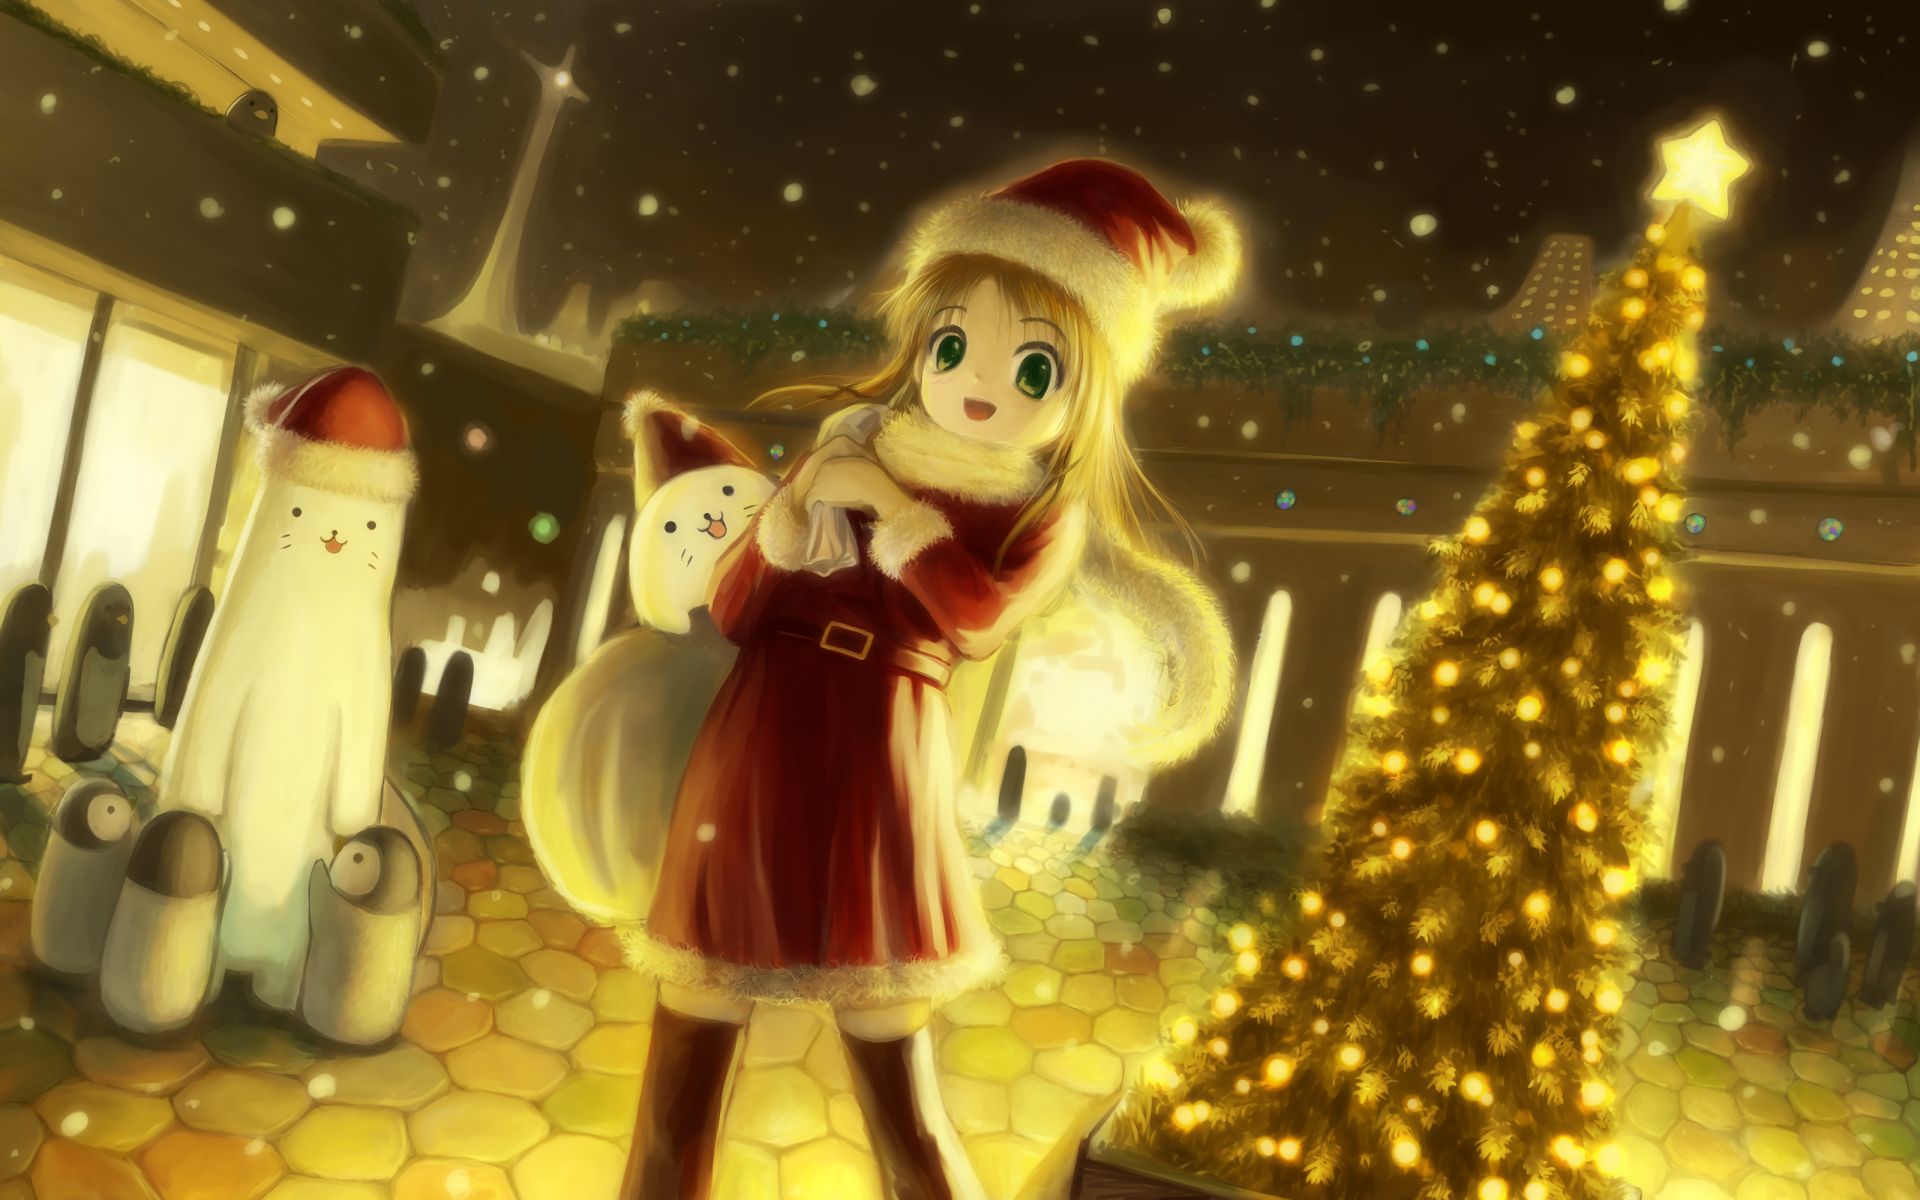 Anime Christmas Images - Free Download on Freepik